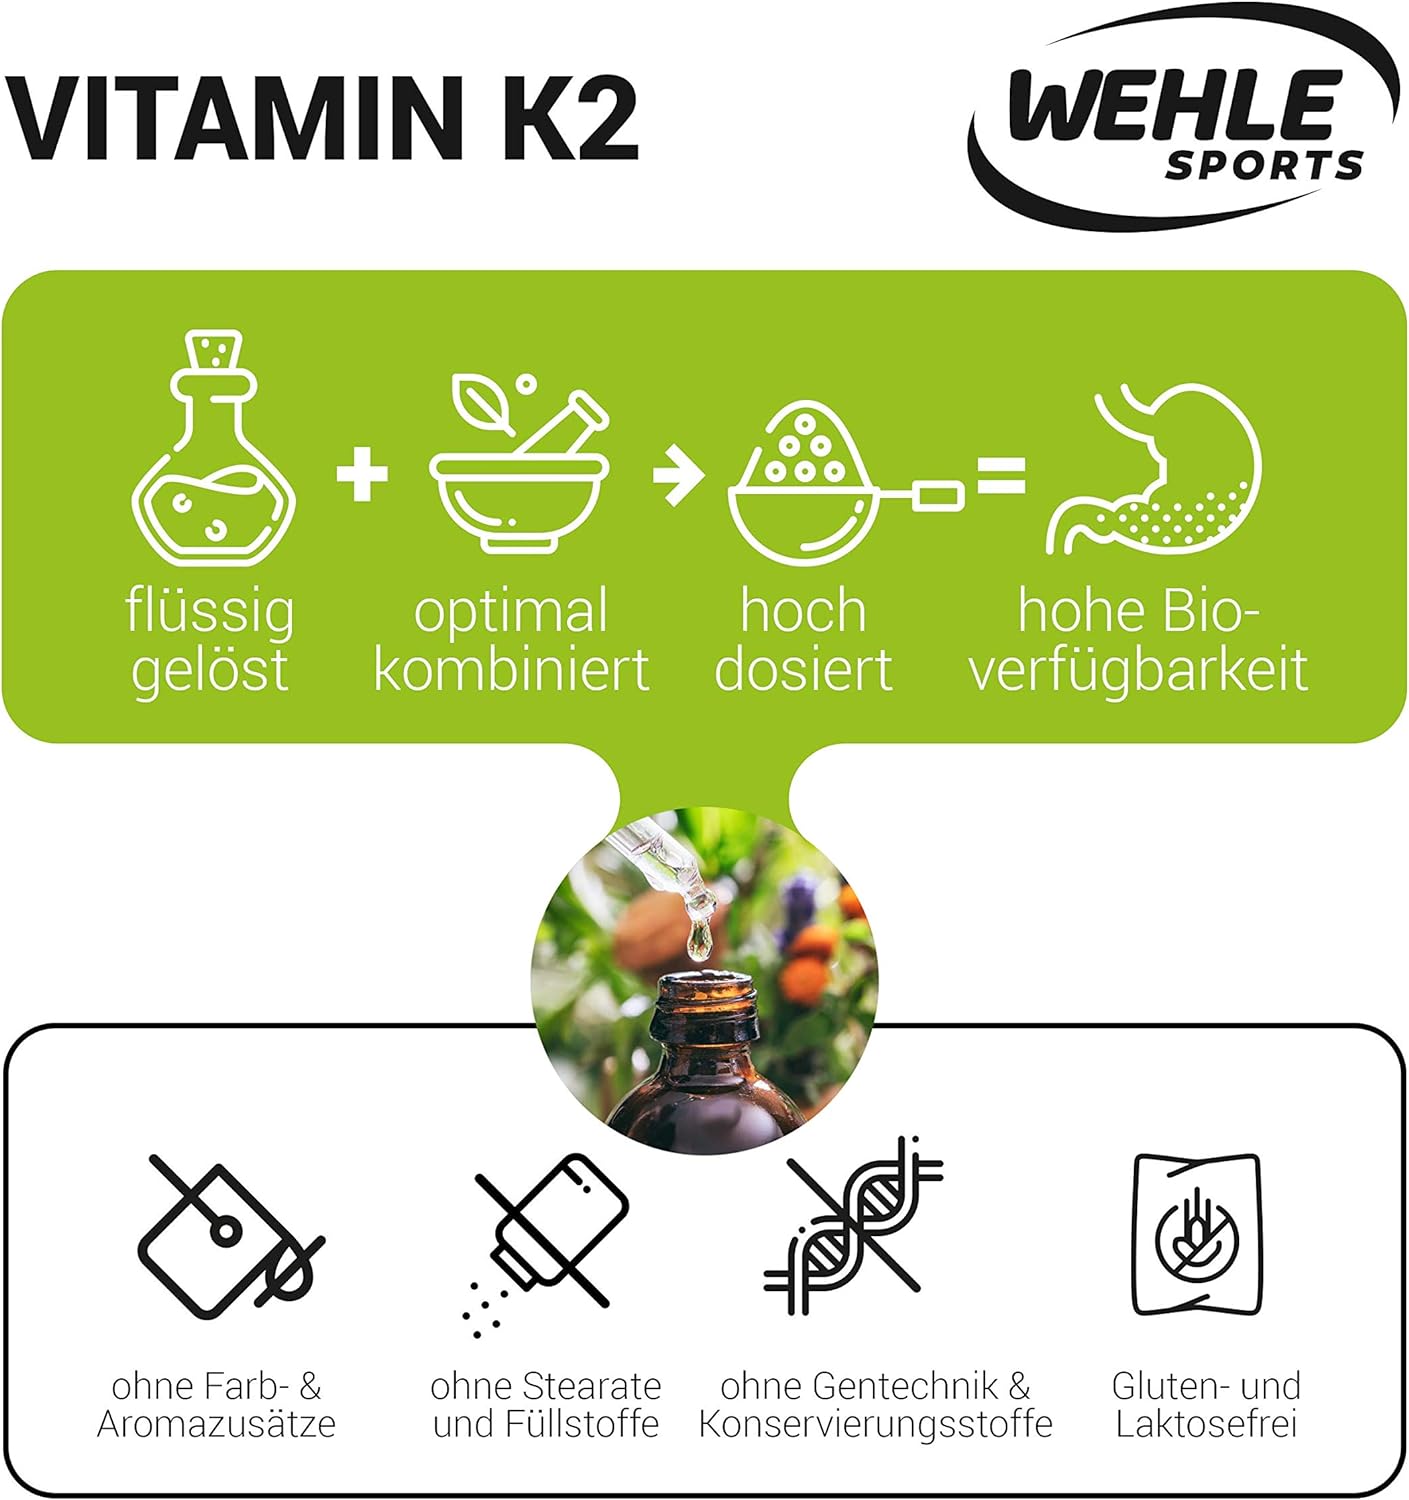 B-Ware Wehle Sports Vitamin K2 MK7 Tropfen - 50ml 1850 Tropfen